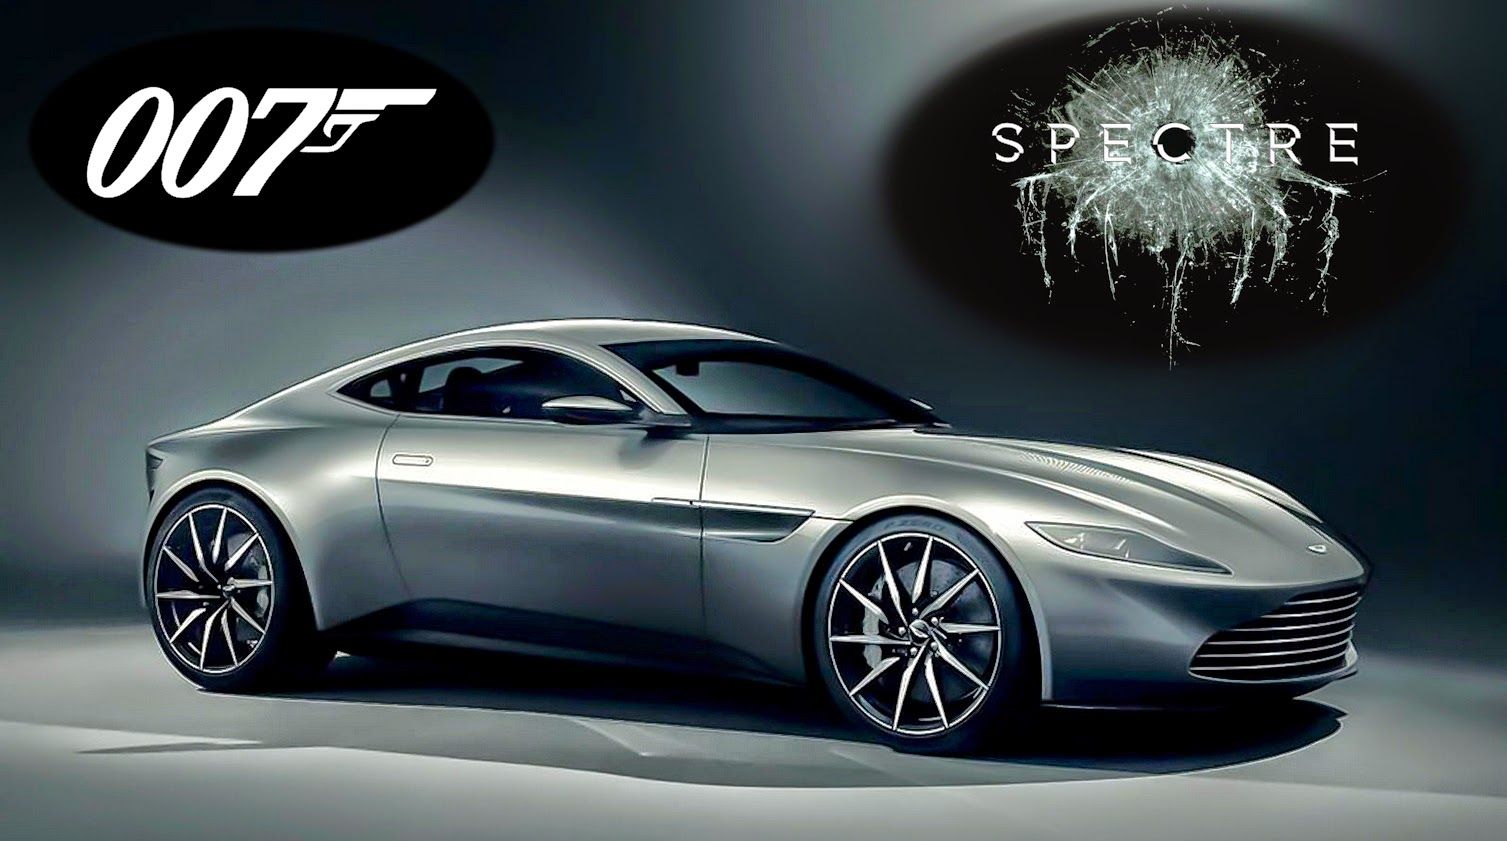 2015 Aston Martin DB10 Spectre